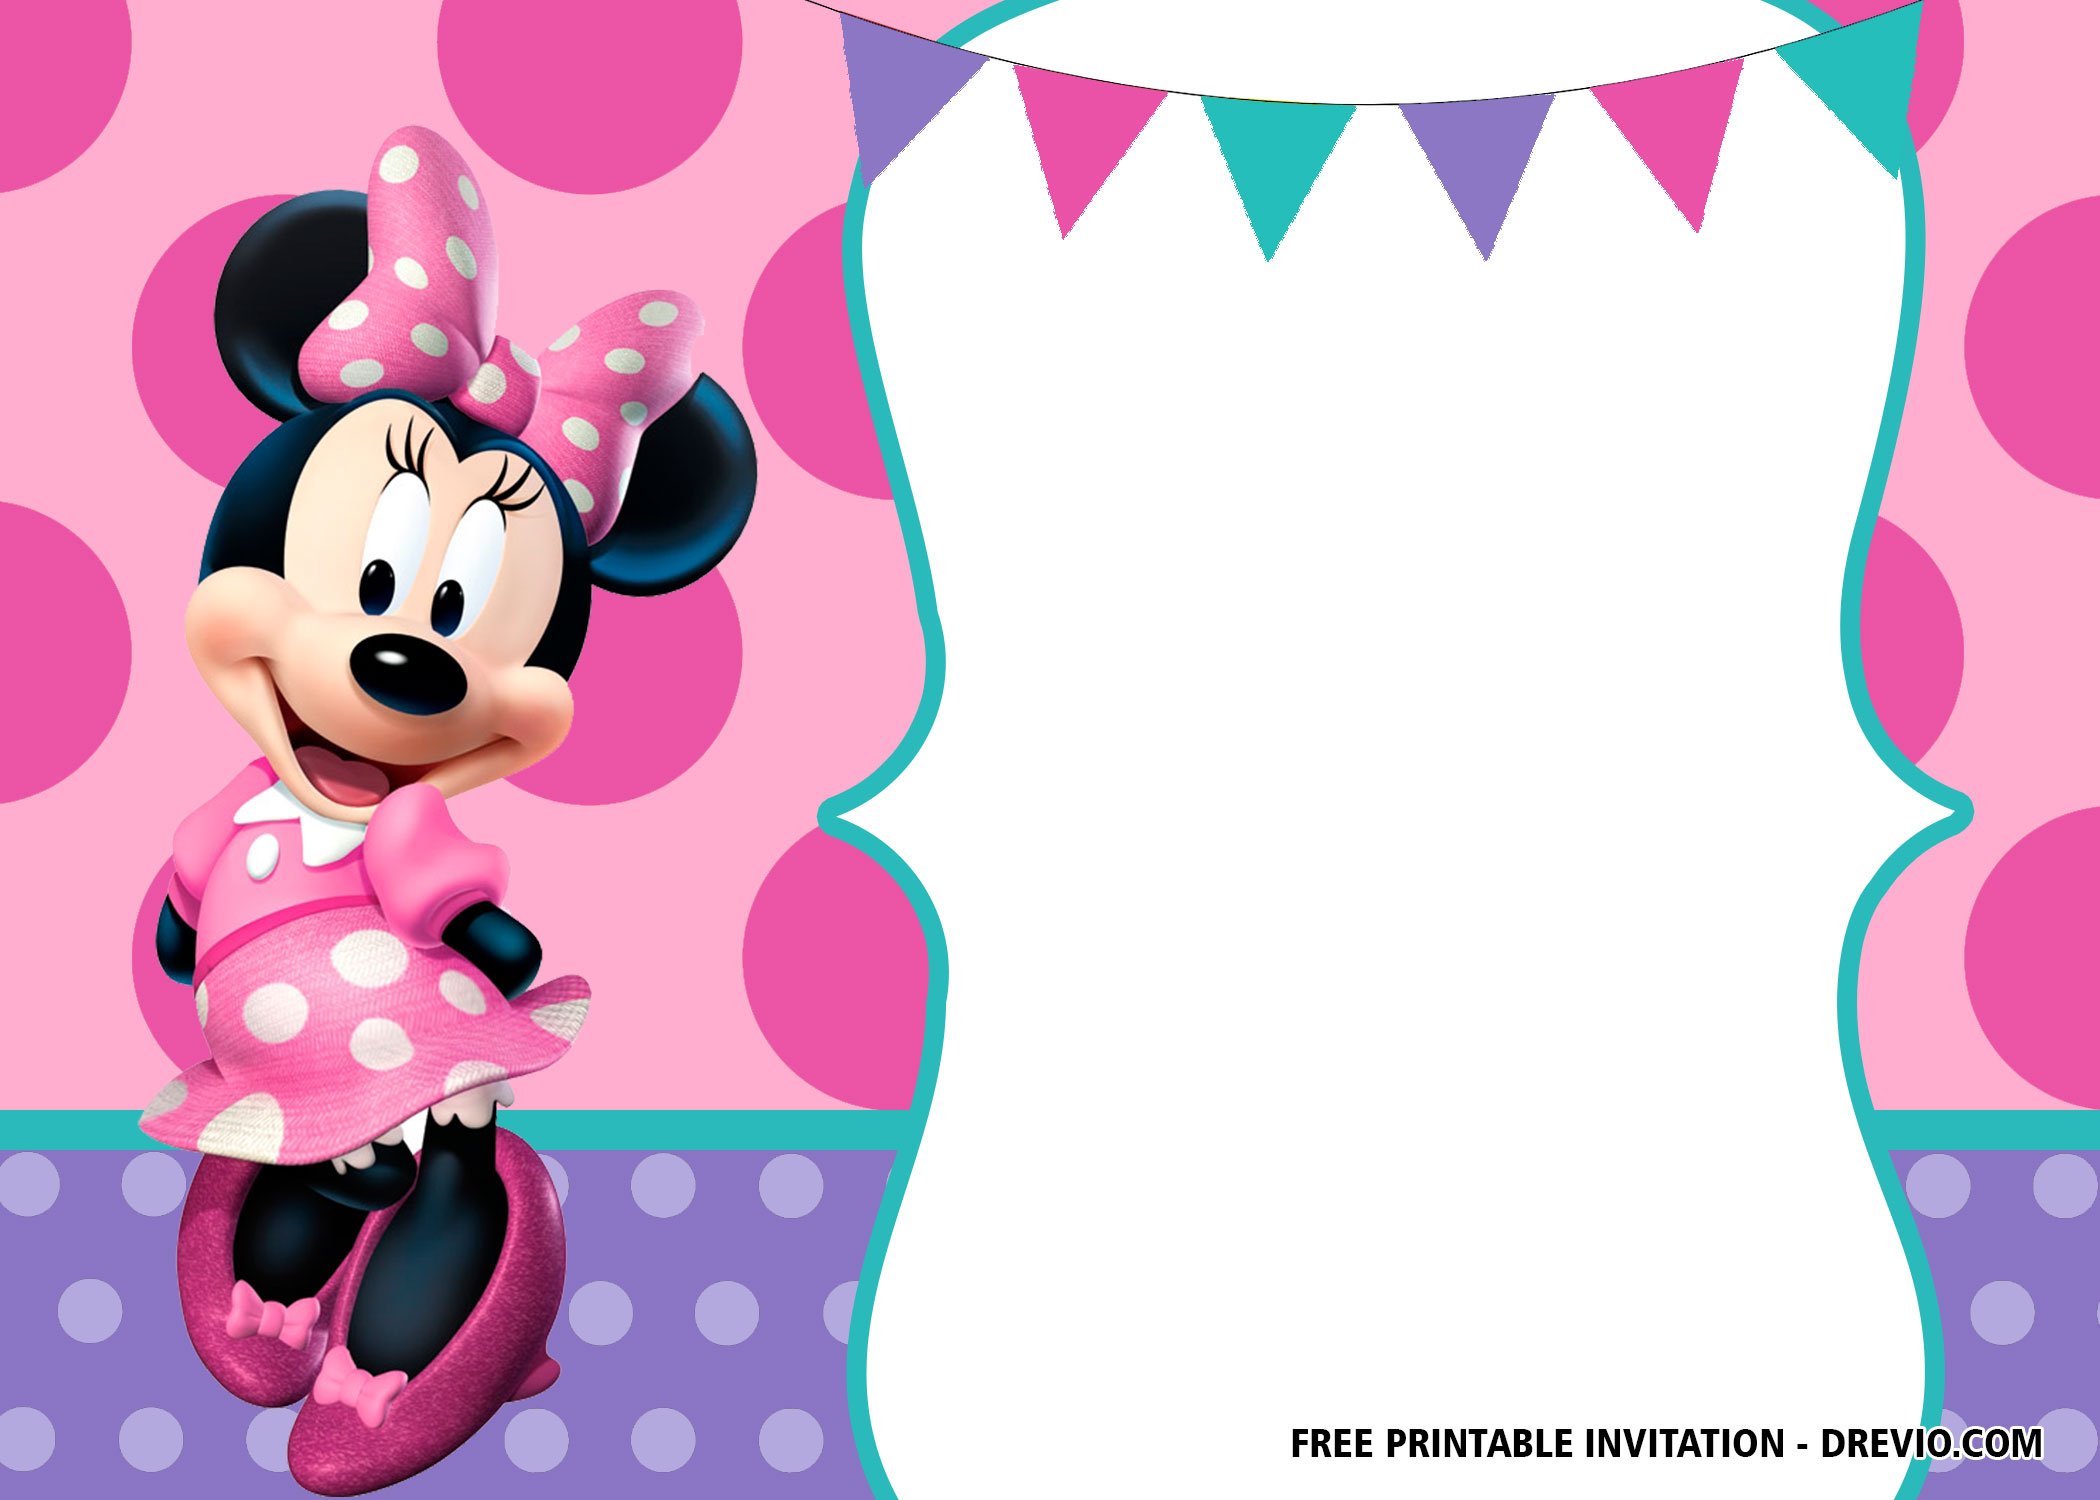 30+ FREE Printable Minnie Mouse Birthday Invitation Templates Download Hundreds FREE PRINTABLE